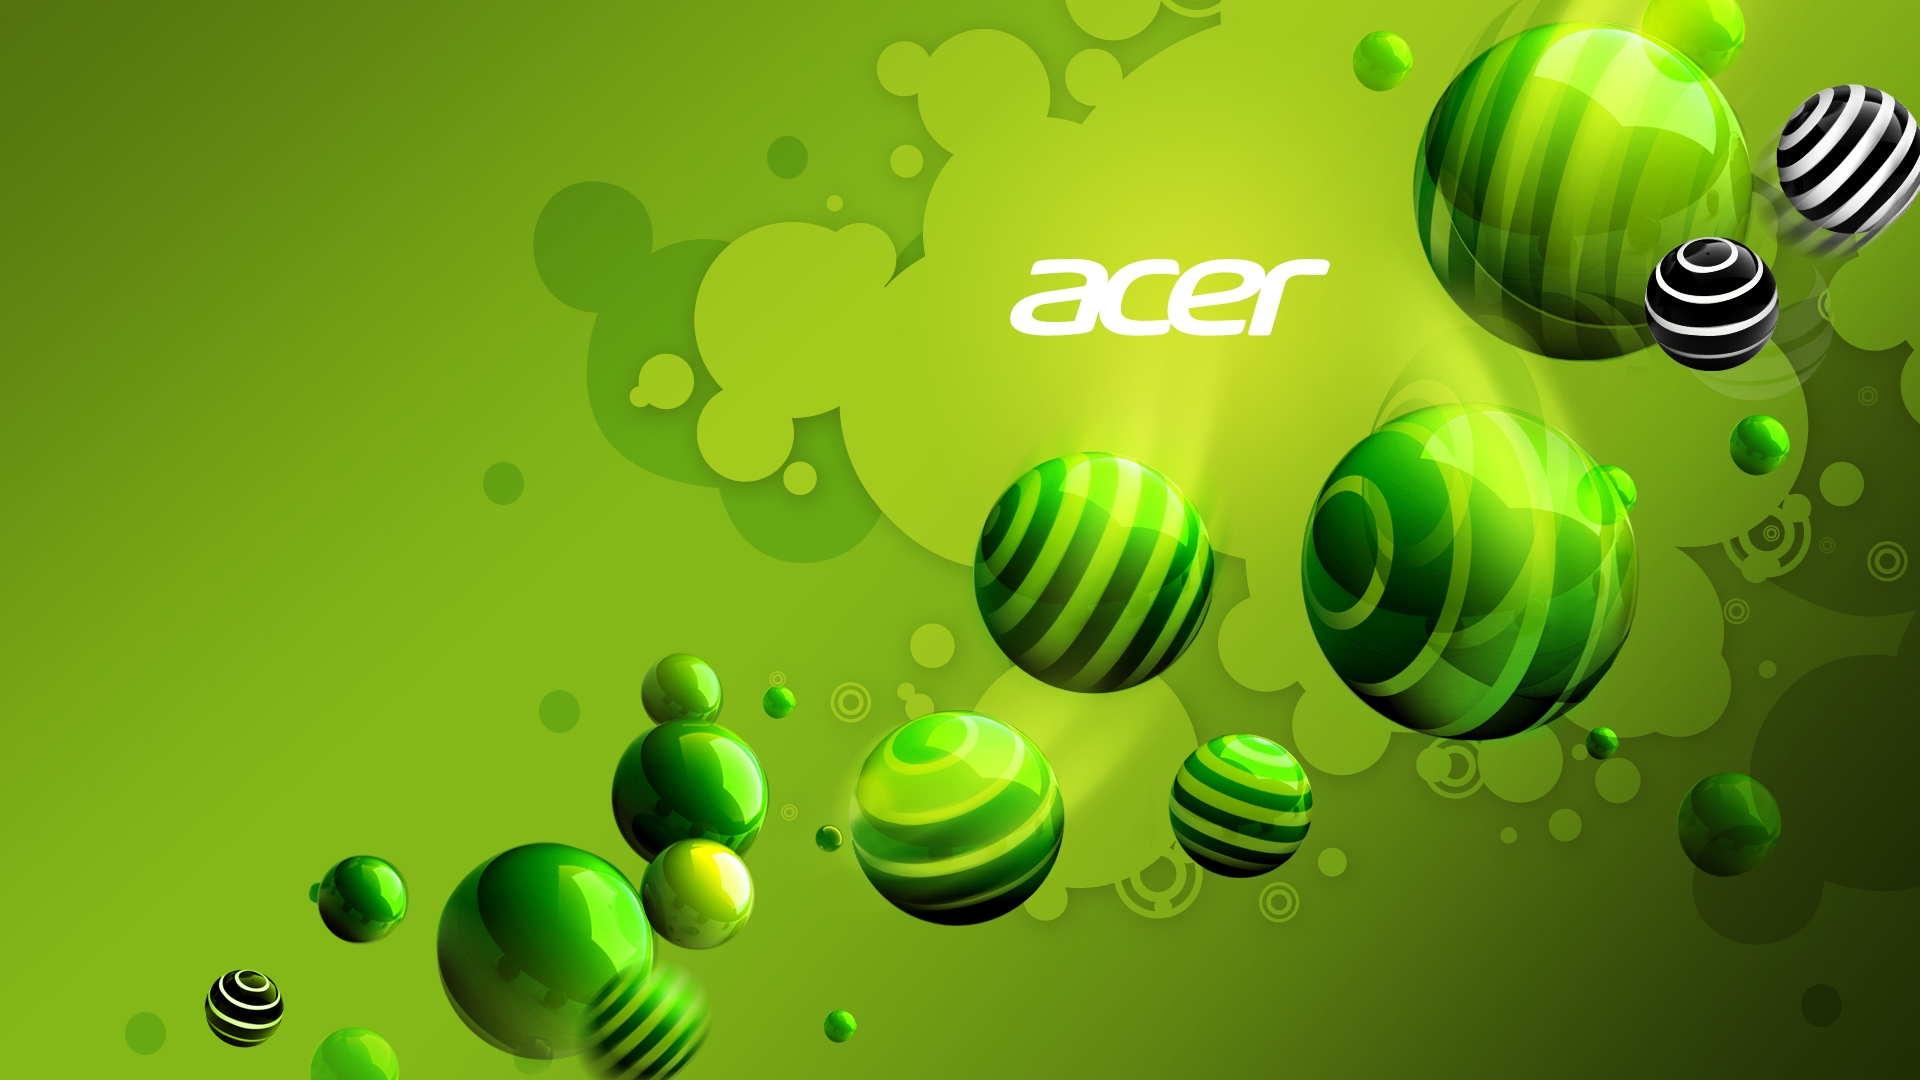 Acer Green World Hq Wallpaper High Quality